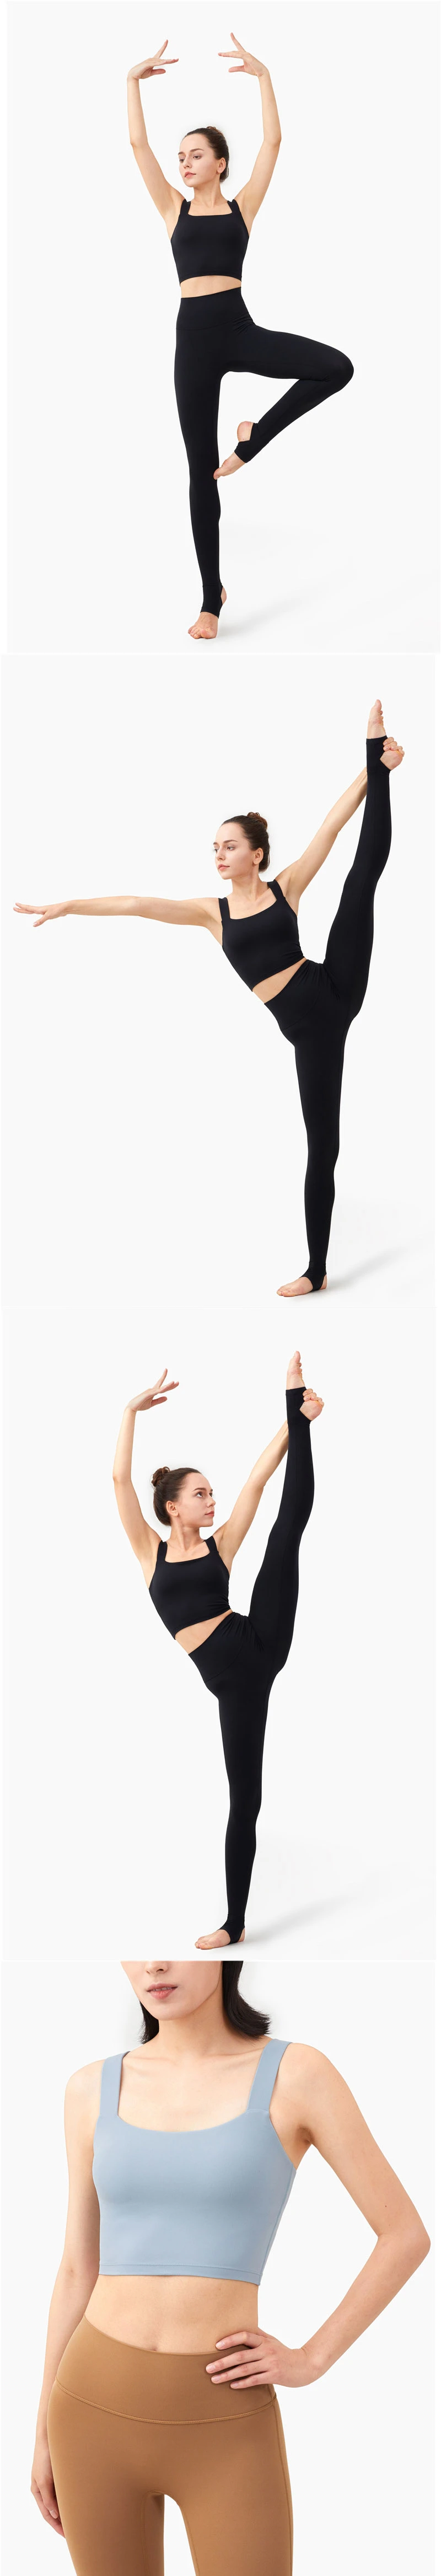 Girls New Design Workout Underwear Padded Athletic Sports Fitness Yoga Bra